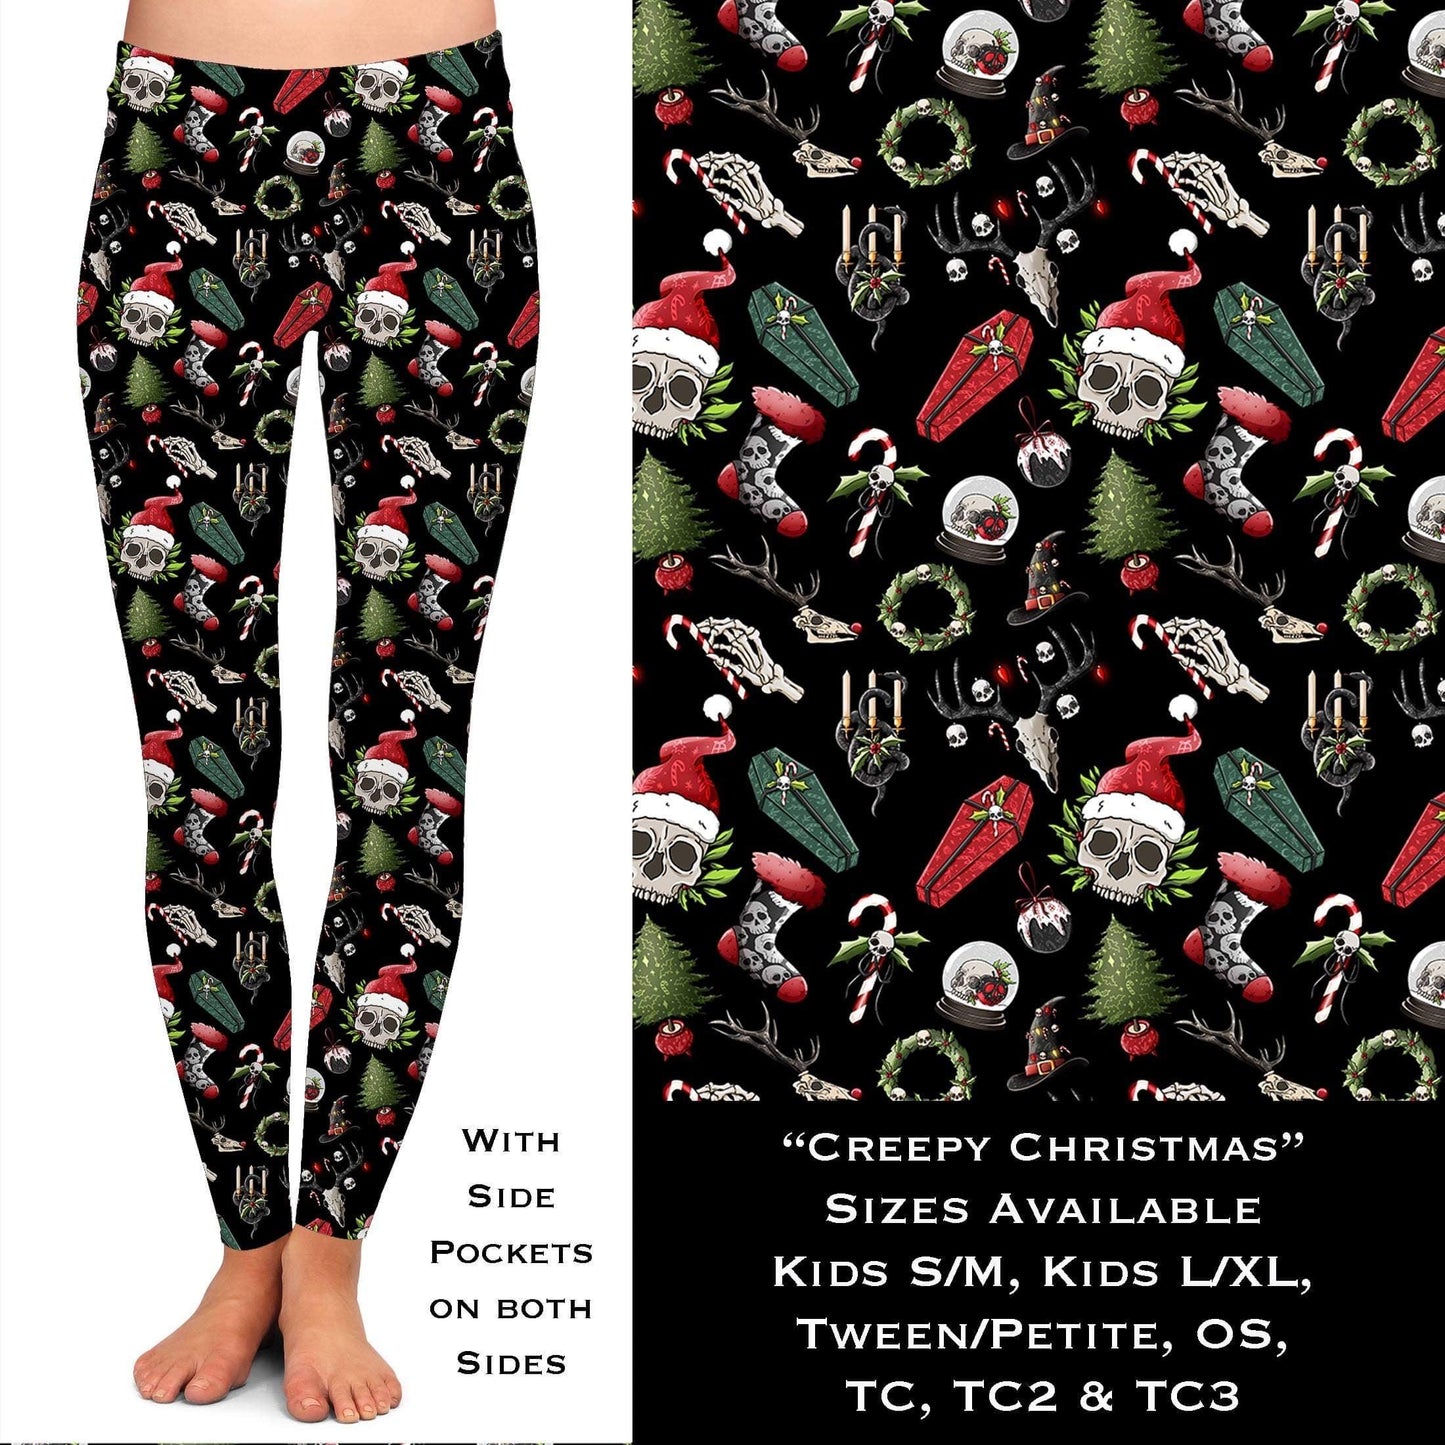 Creepy Christmas - Leggings with Pockets